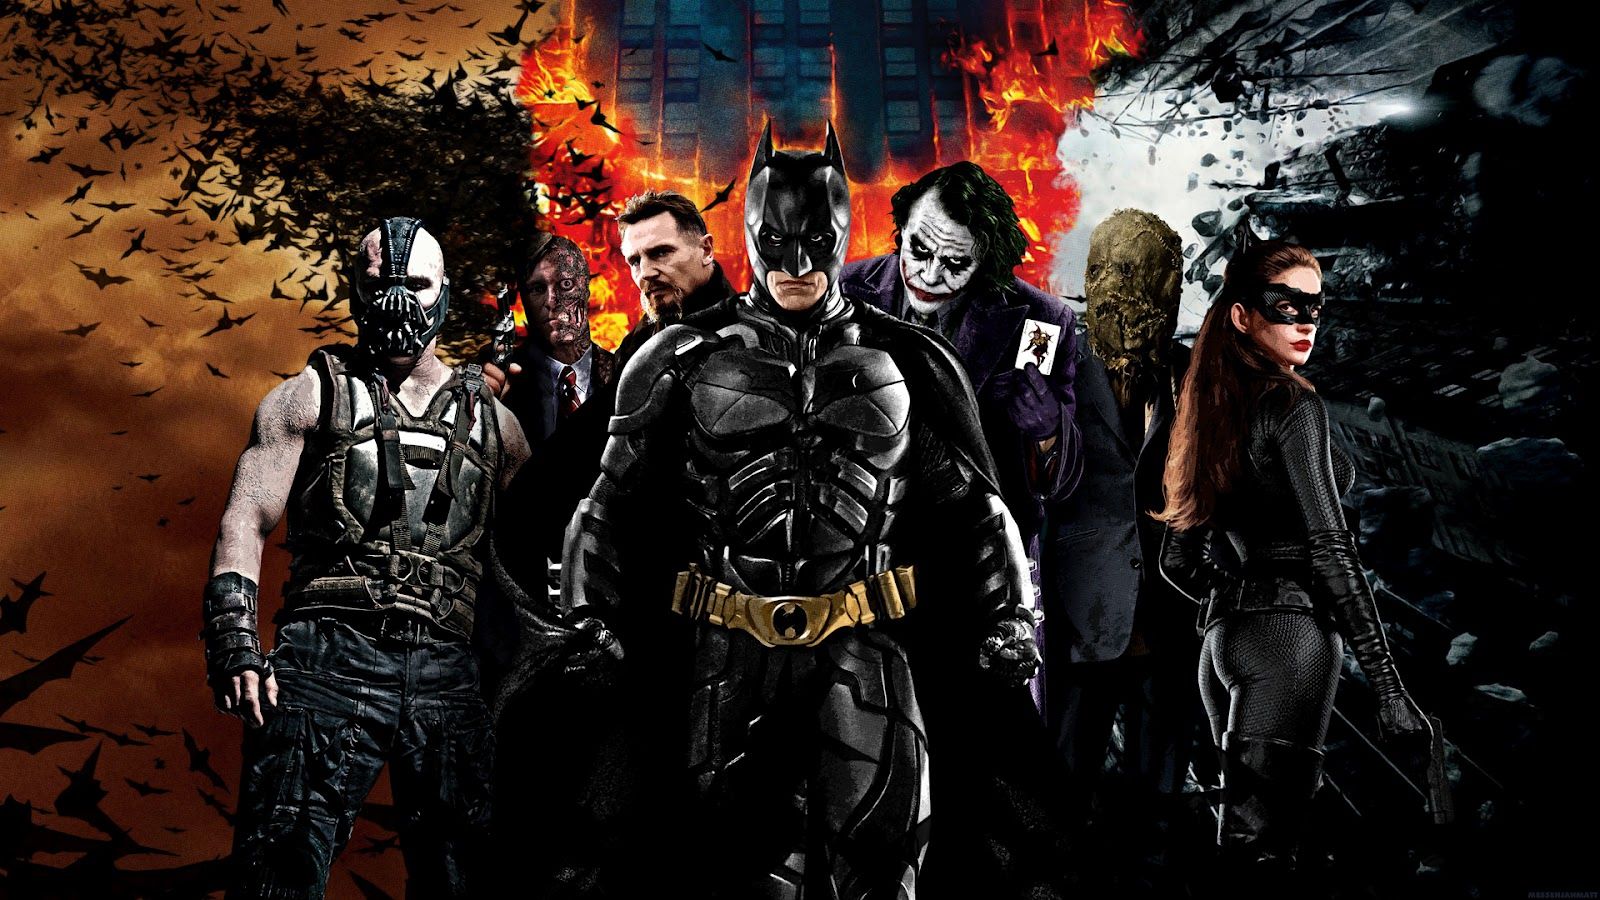 Batman Vs Bane Wallpapers